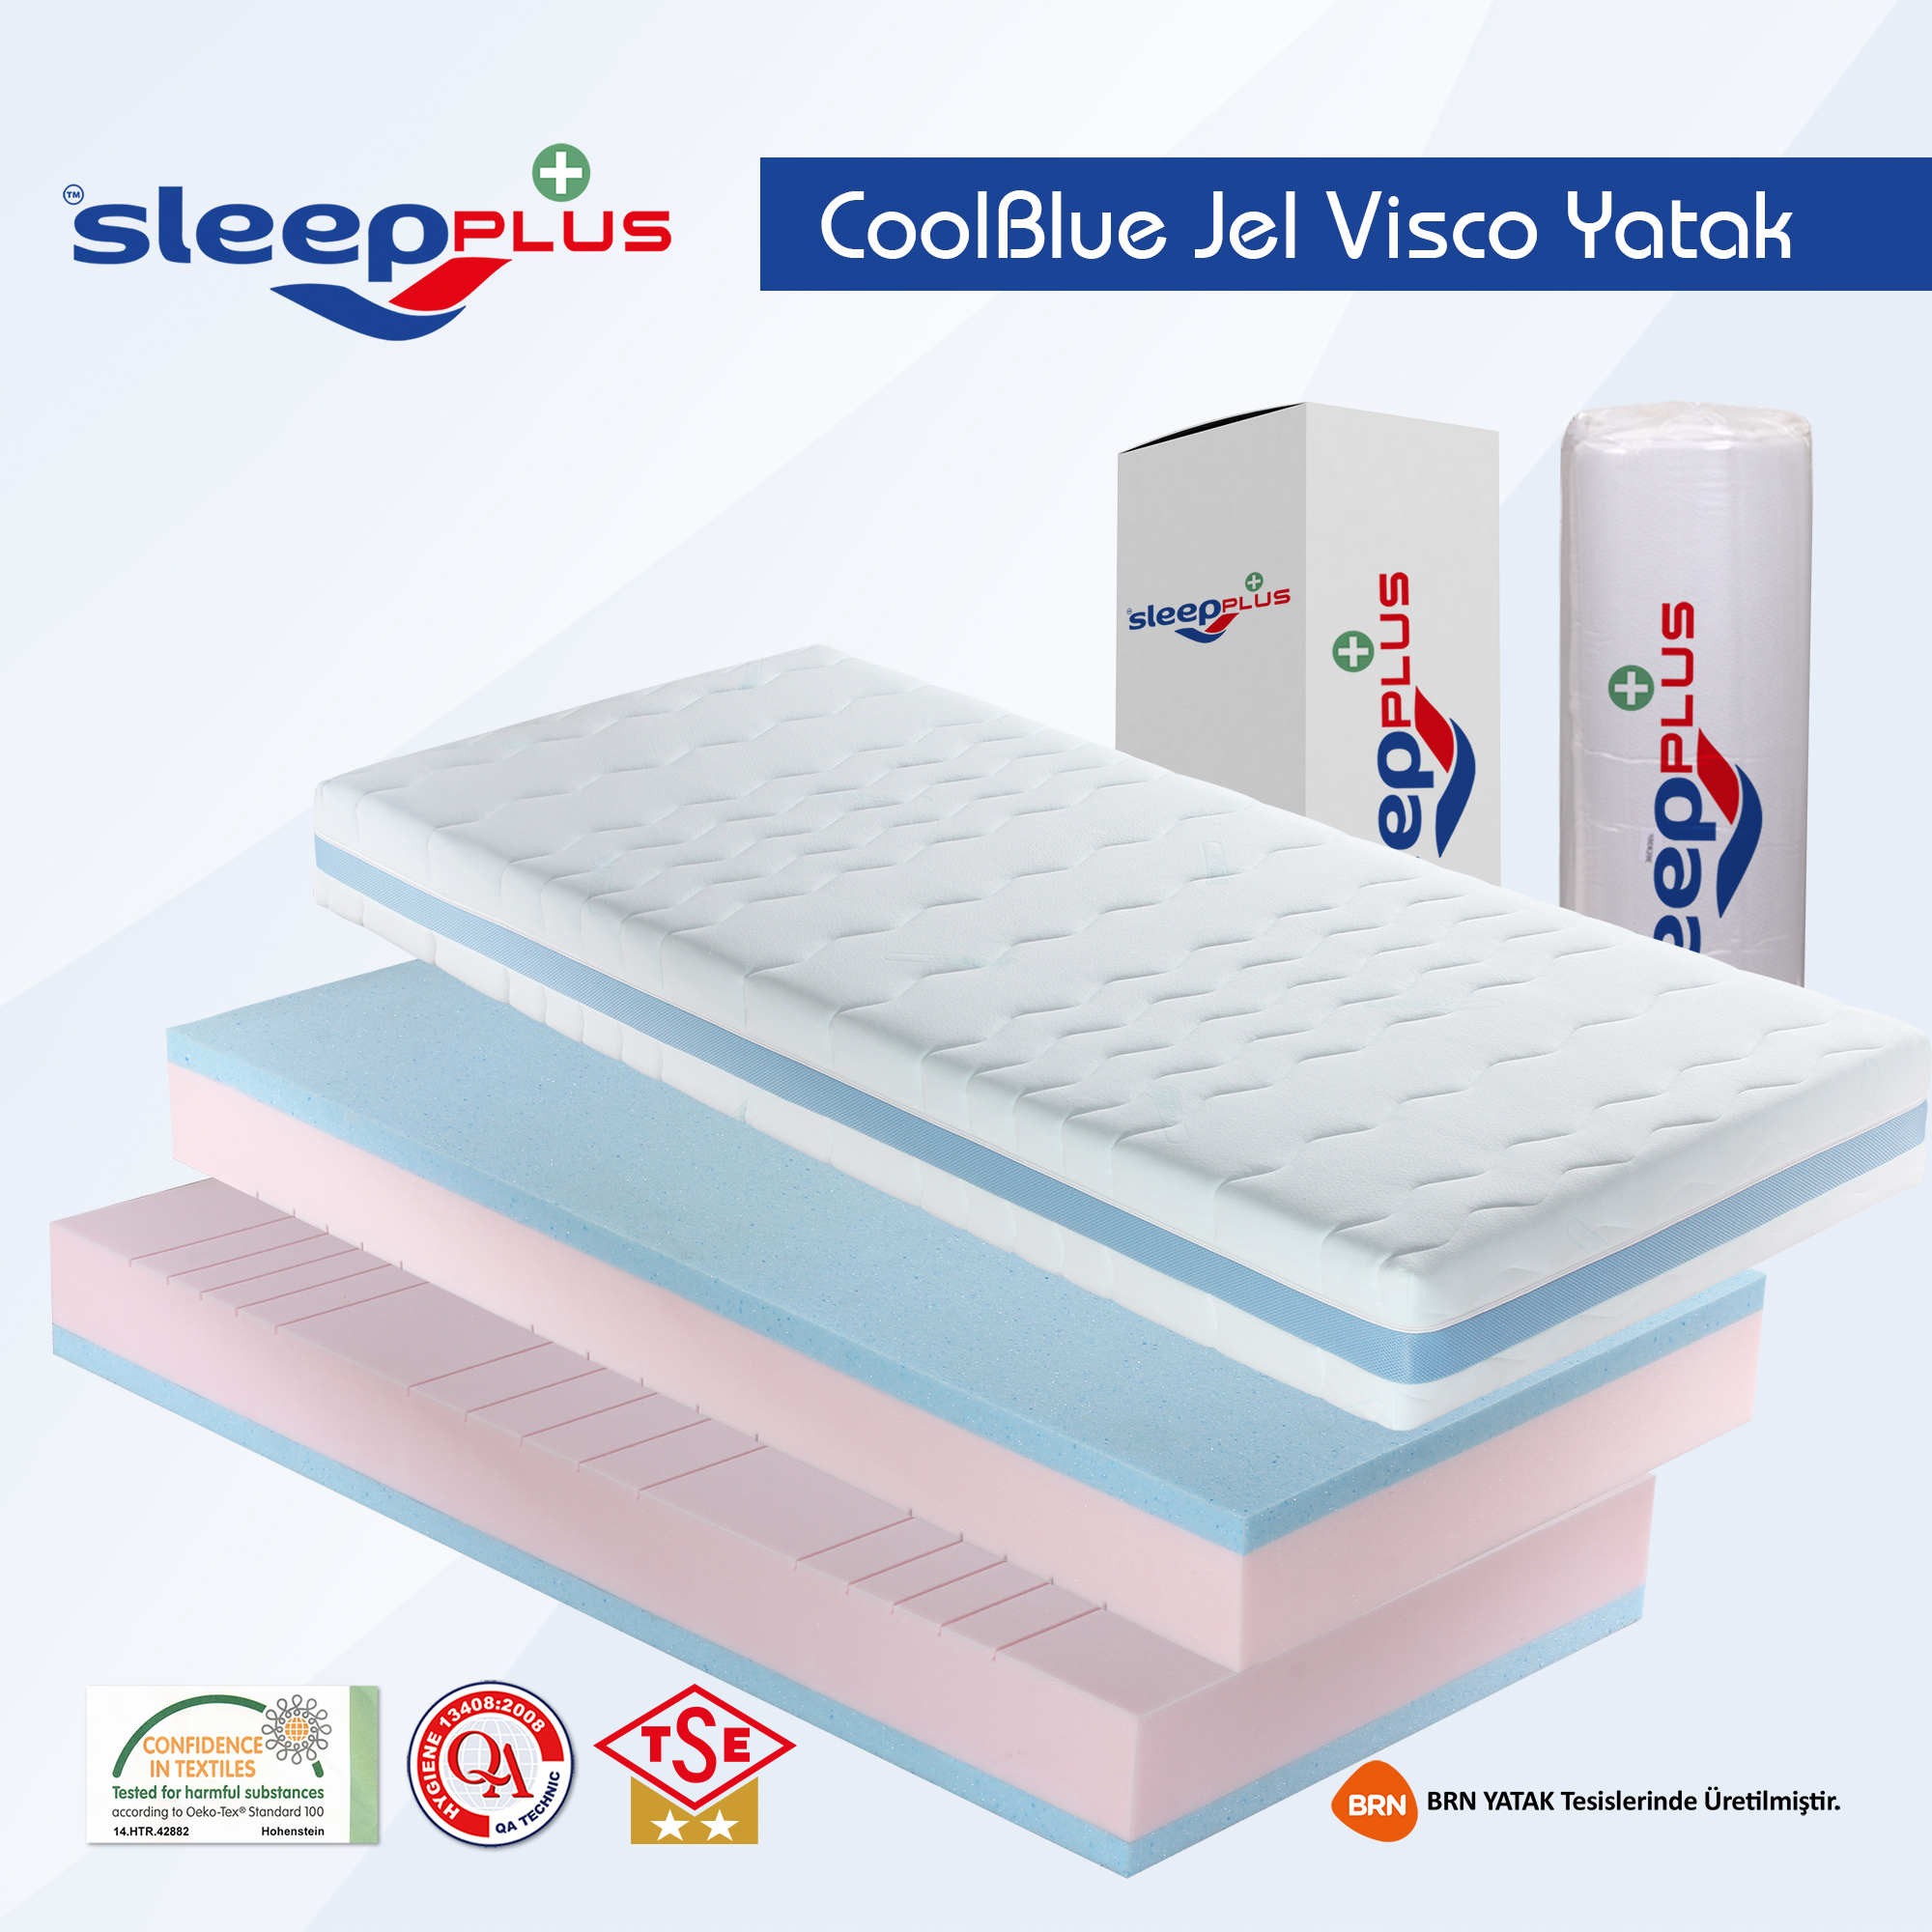 Sleepplus CoolBlue Jel Visco Yatak 150X200 cm Fiyatı